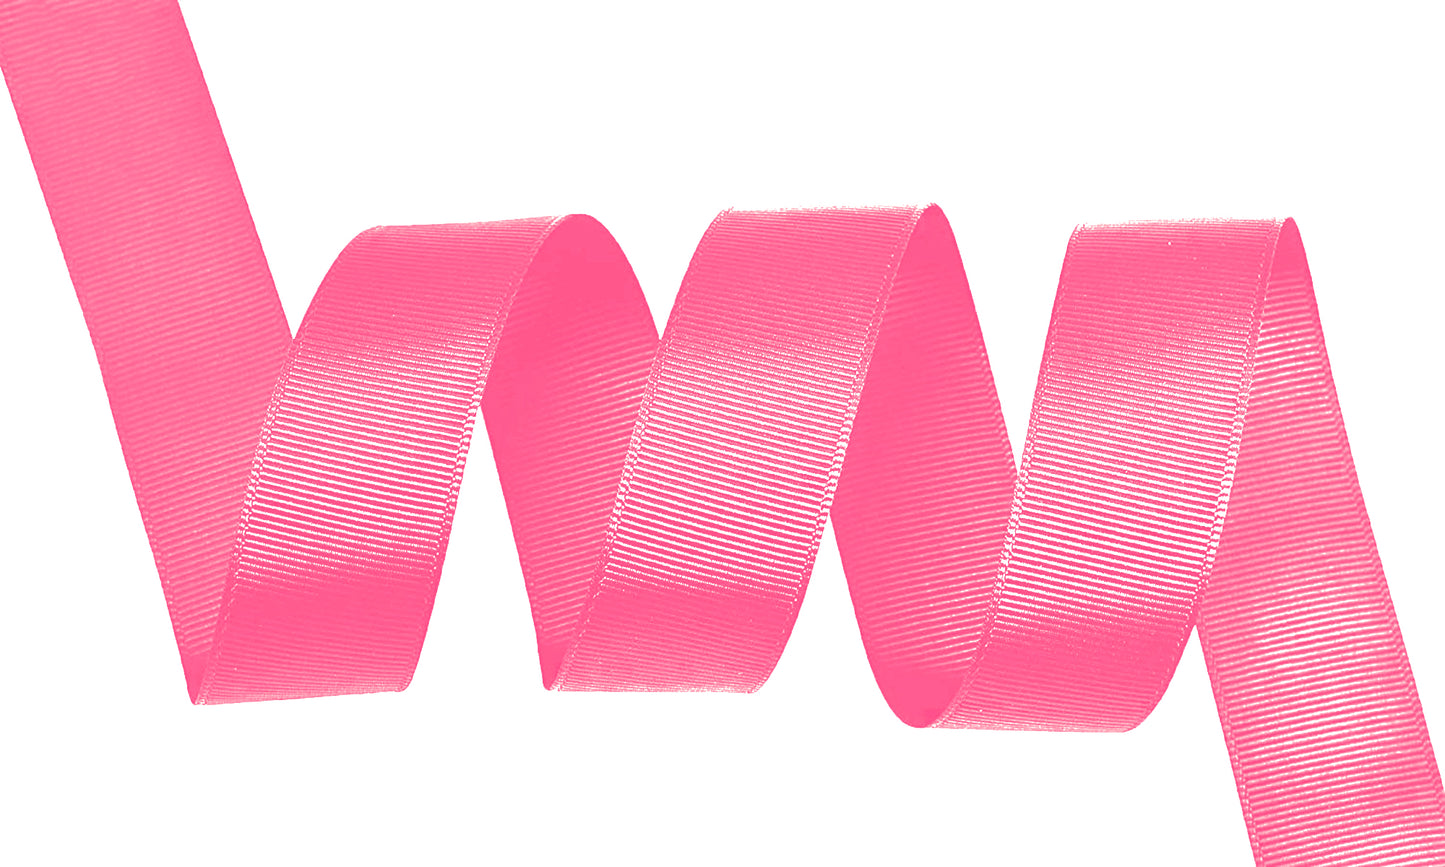 5 Yards Solid Bright Pink Grosgrain Ribbon Yardage DIY Crafts Bows Décor USA